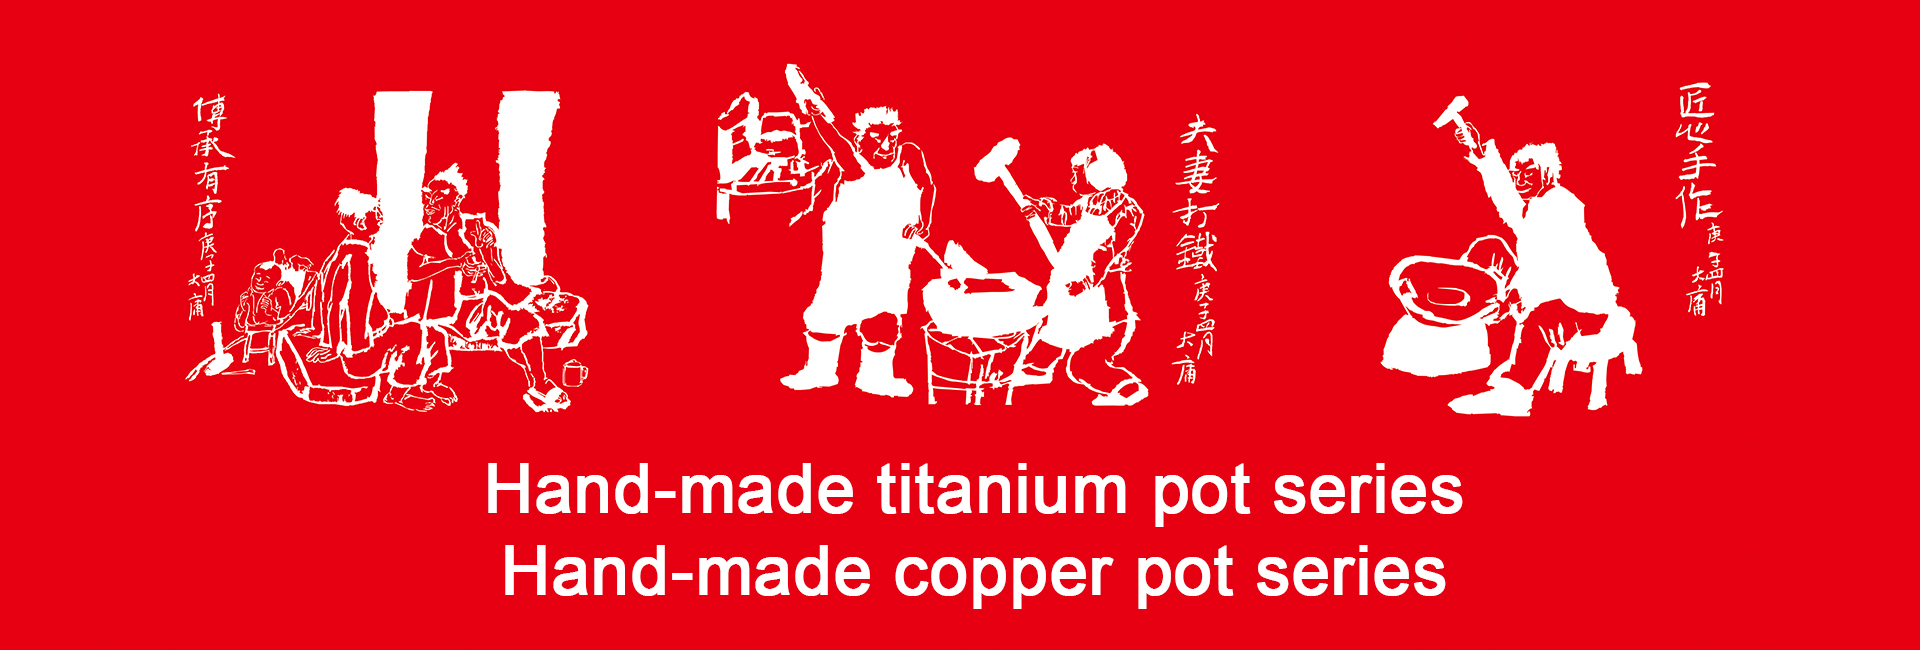 Hand-made titanium pot series